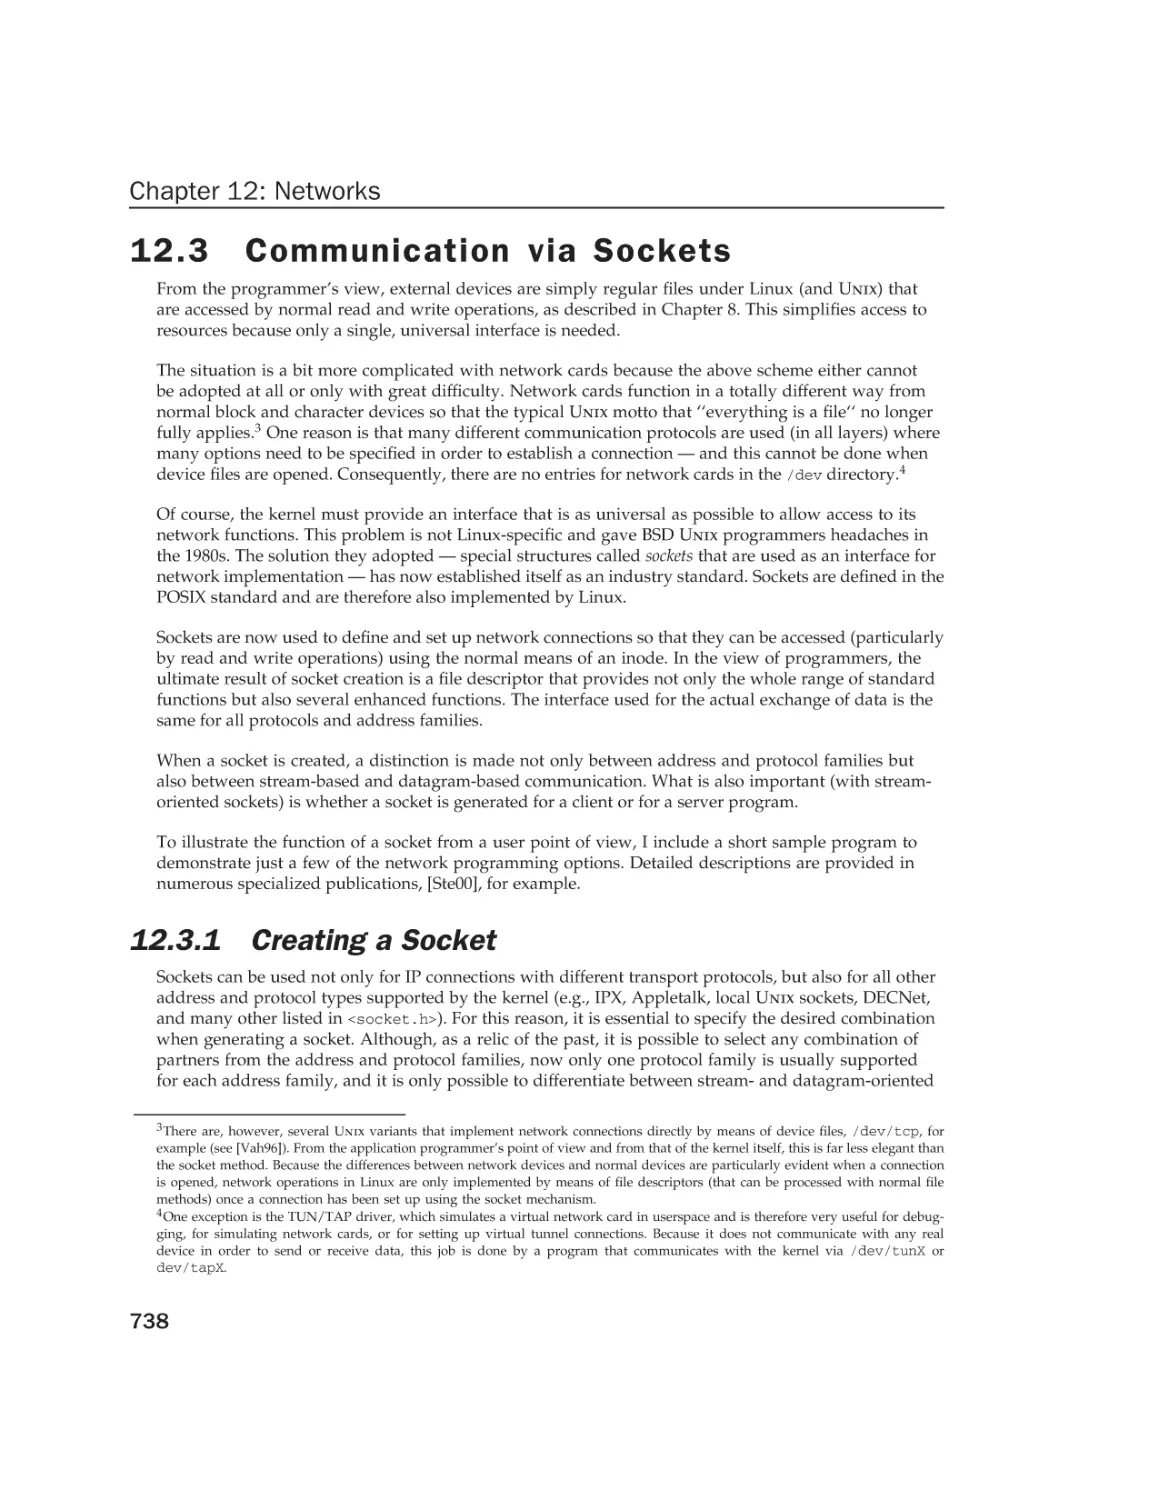 12.3 Communication via Sockets